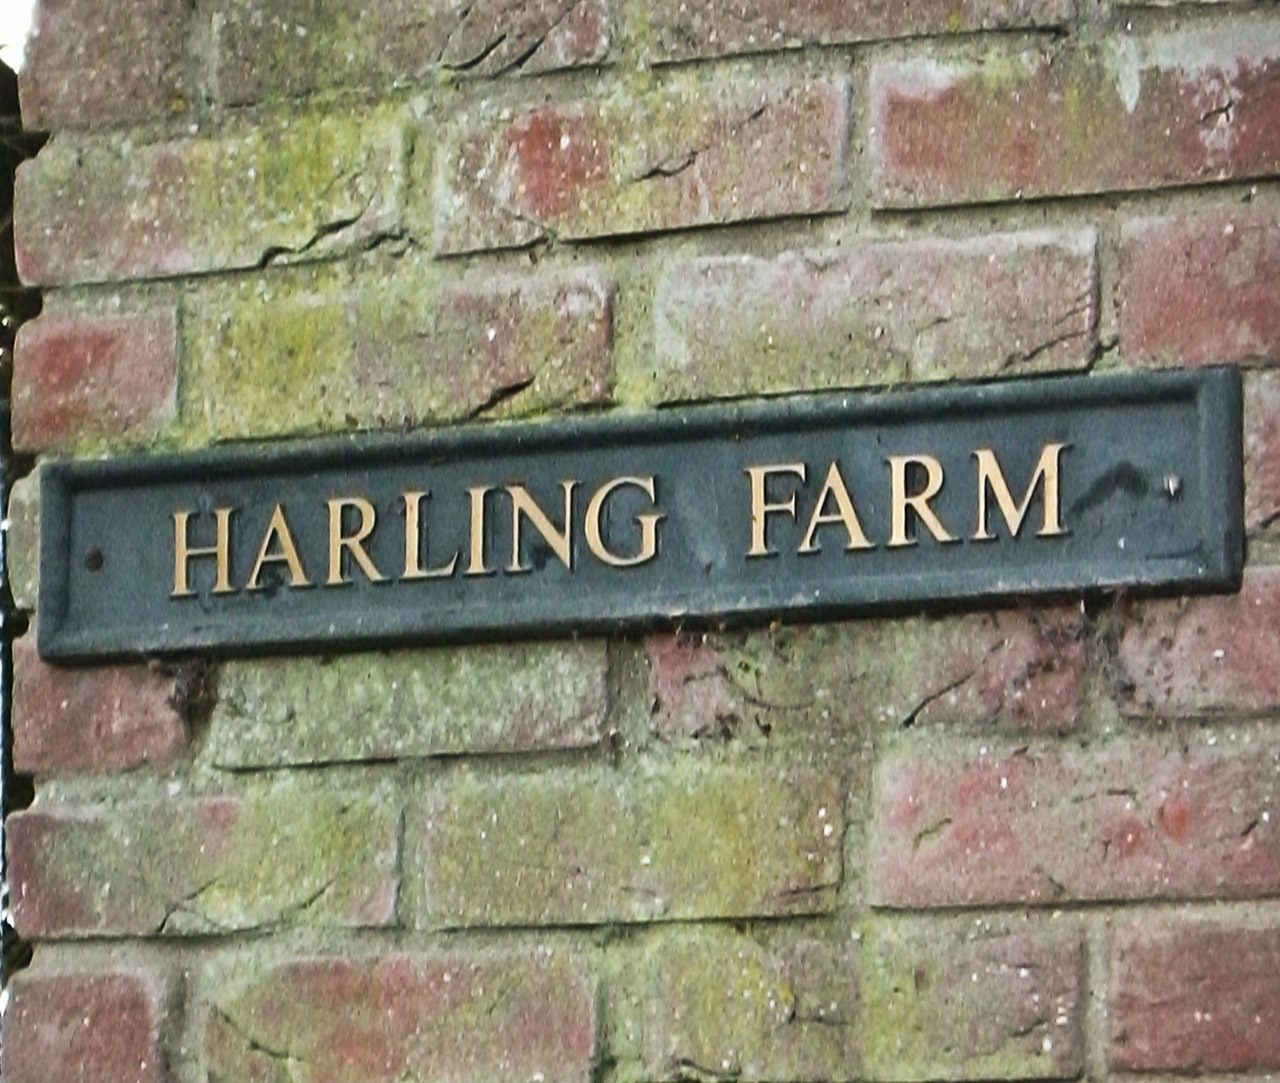 Harling Farm sign